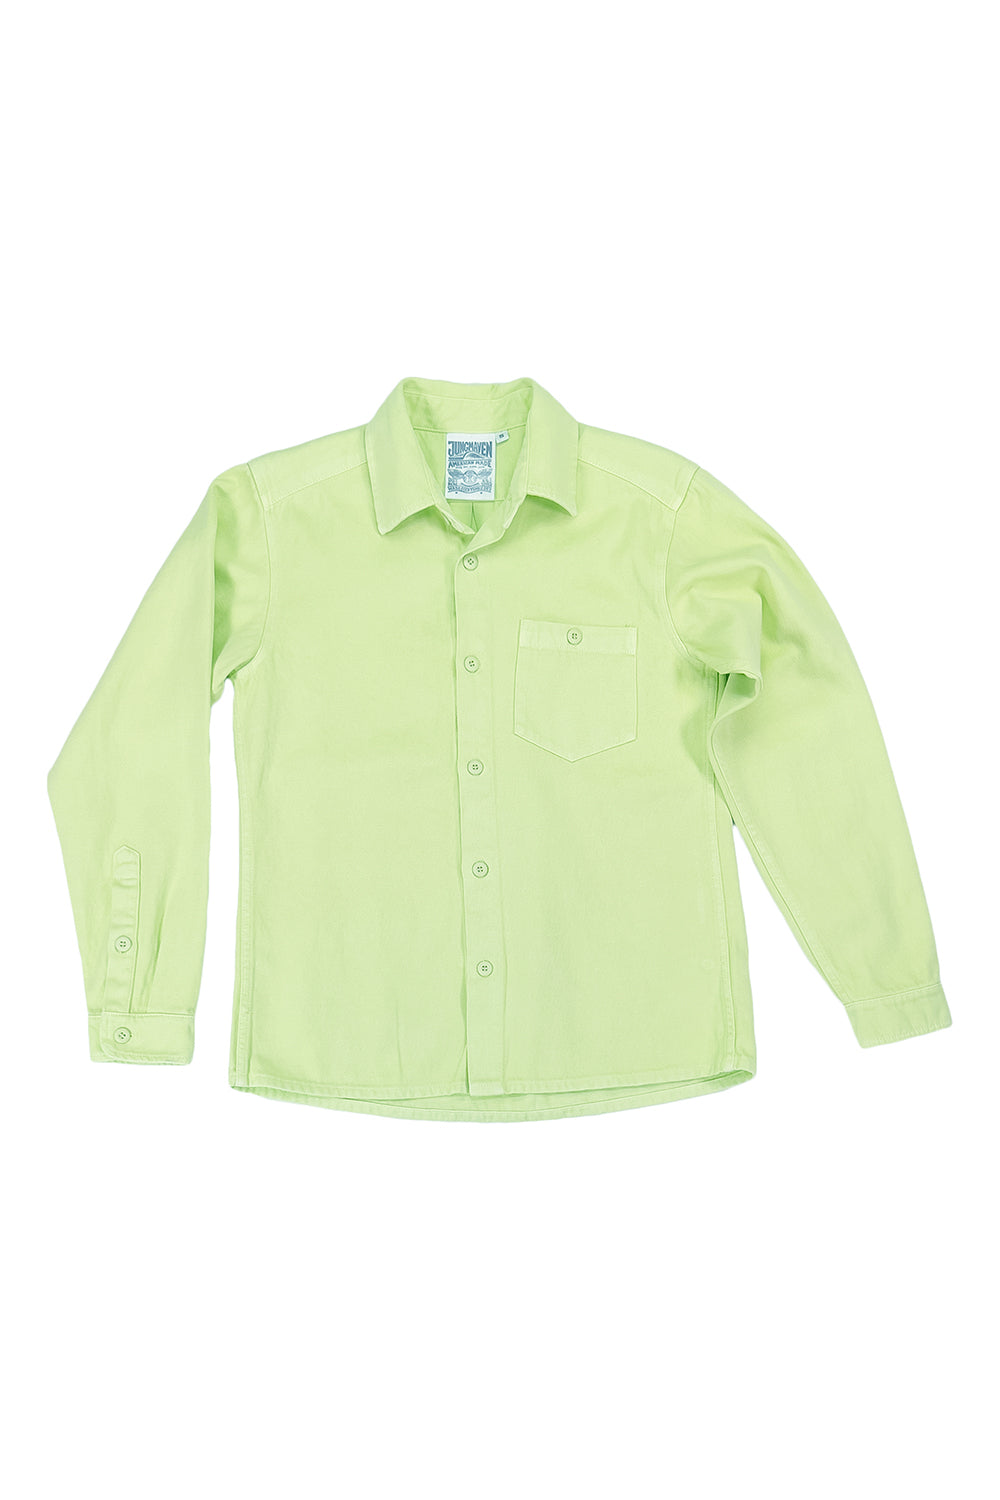 Topanga Shirt - Sale Colors | Jungmaven Hemp Clothing & Accessories / Color: Summer Grass